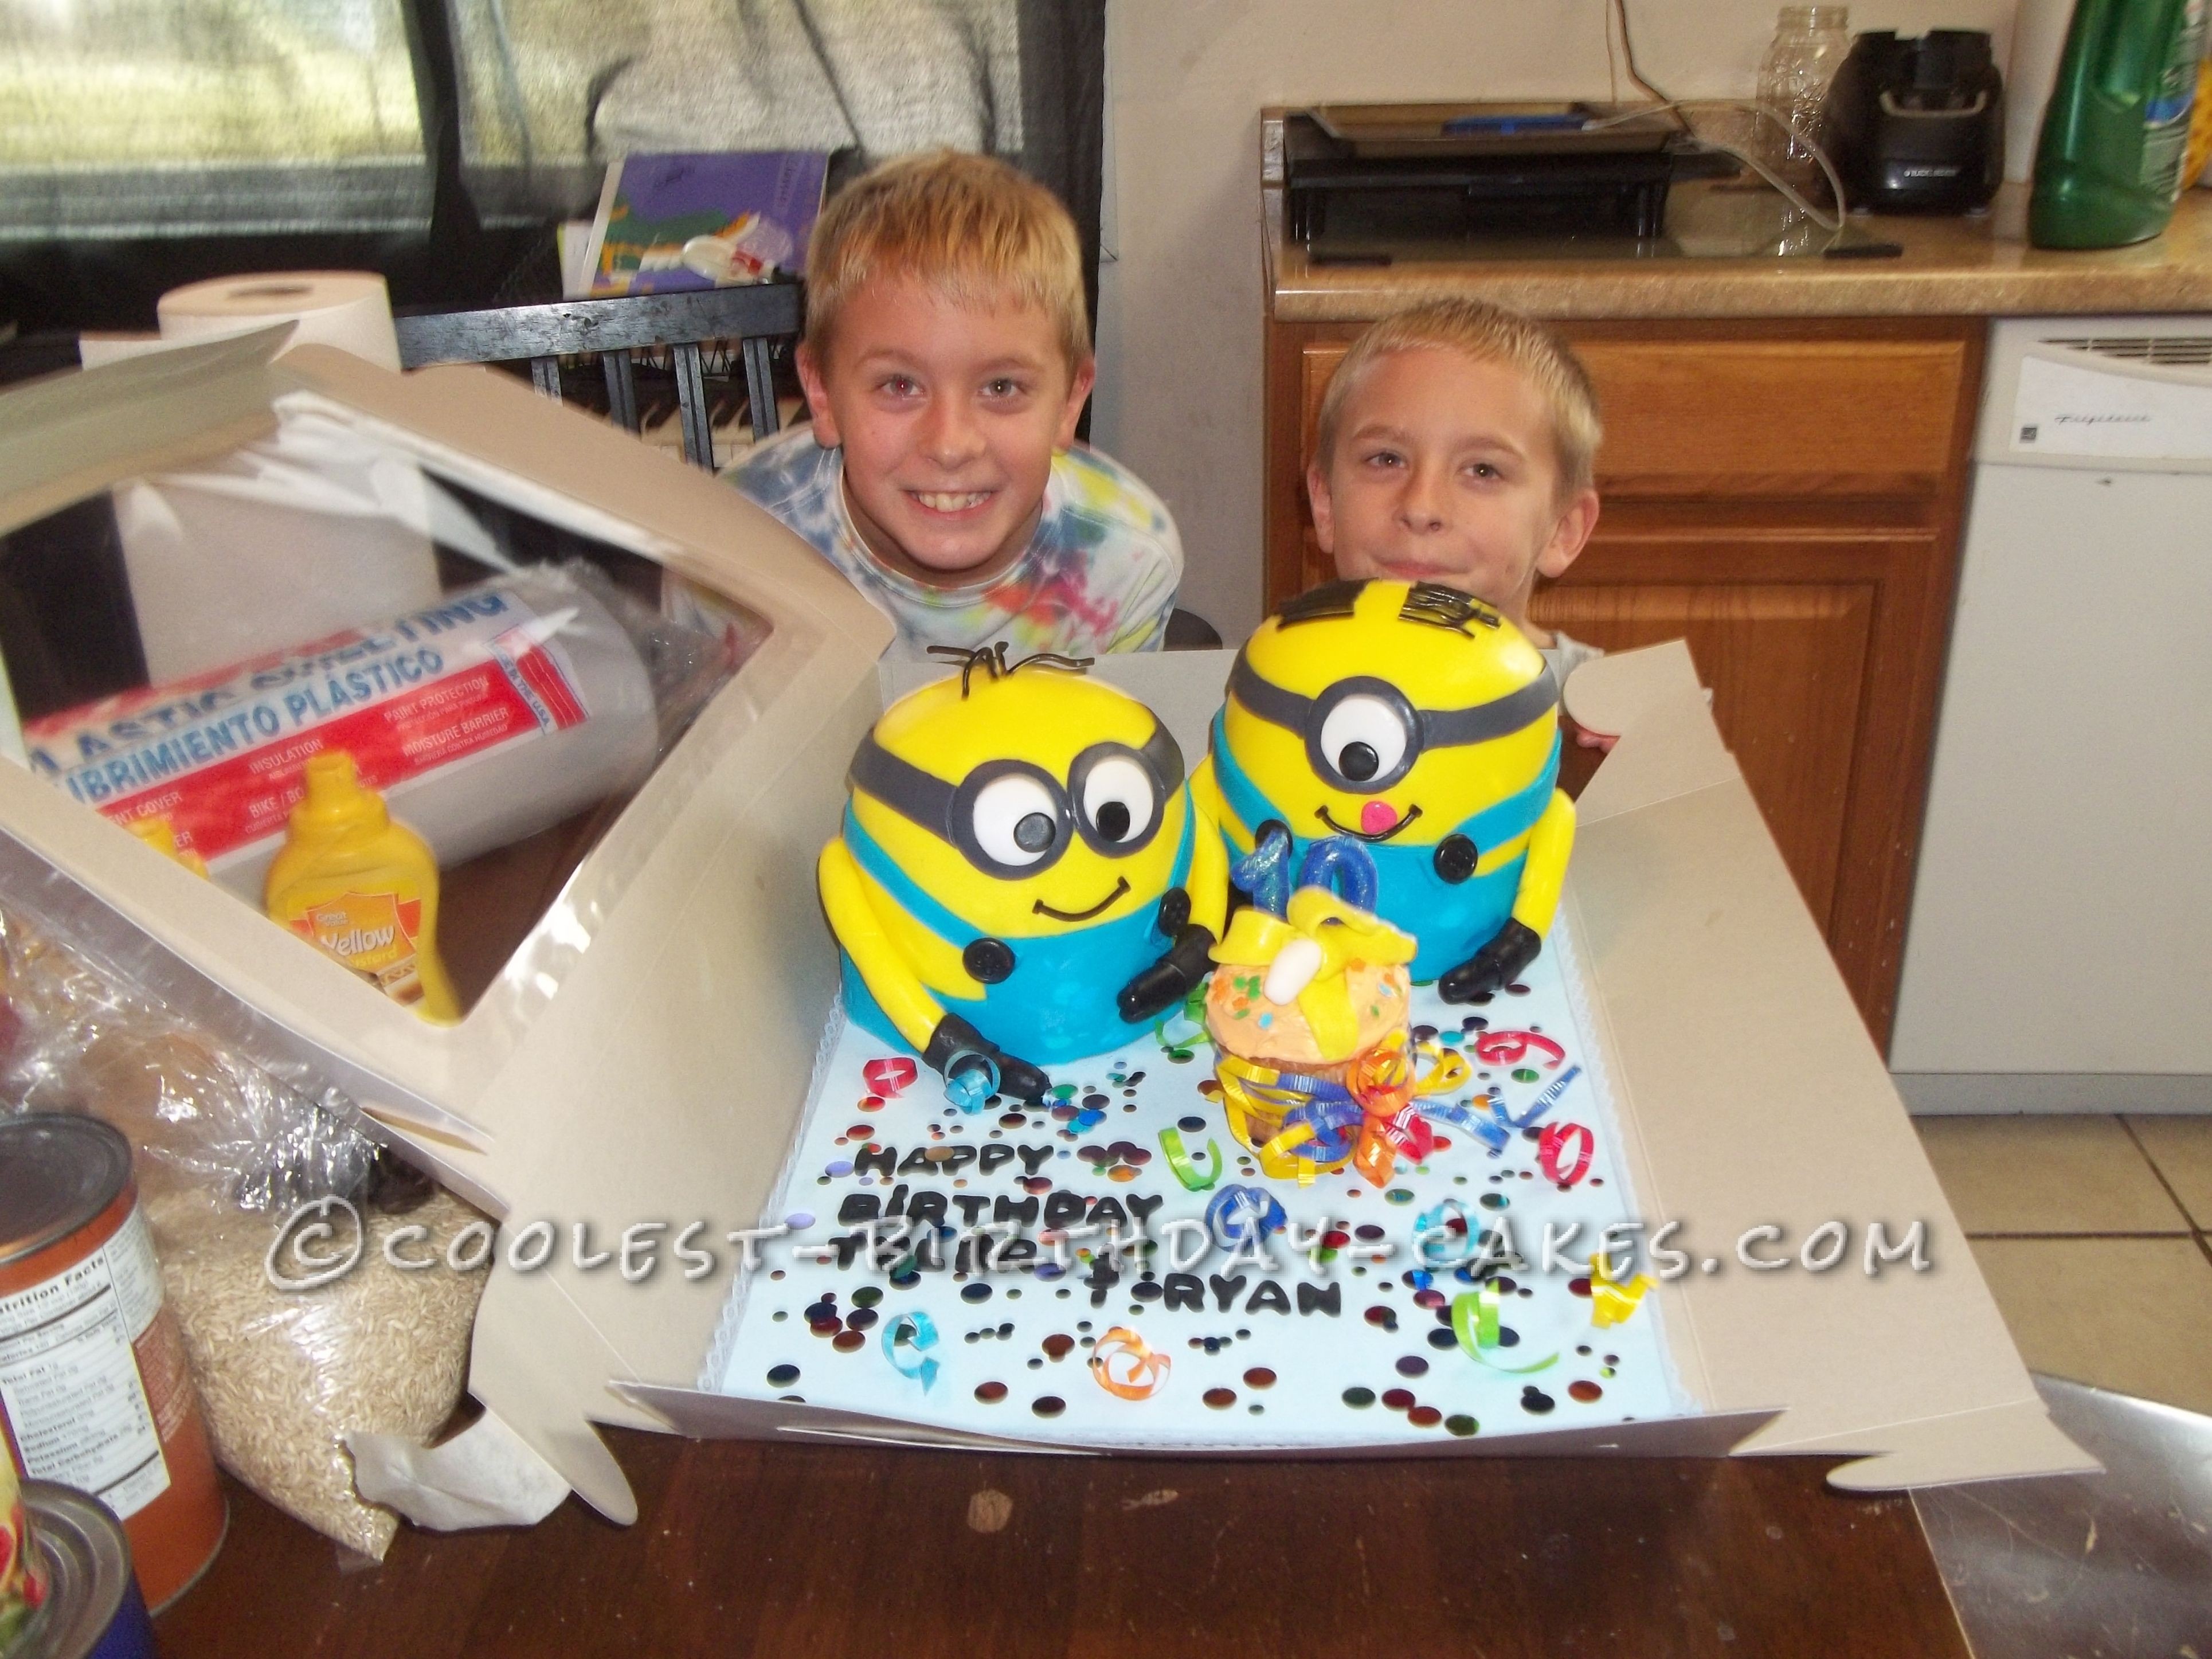 Coolest Minions Birthday Cake